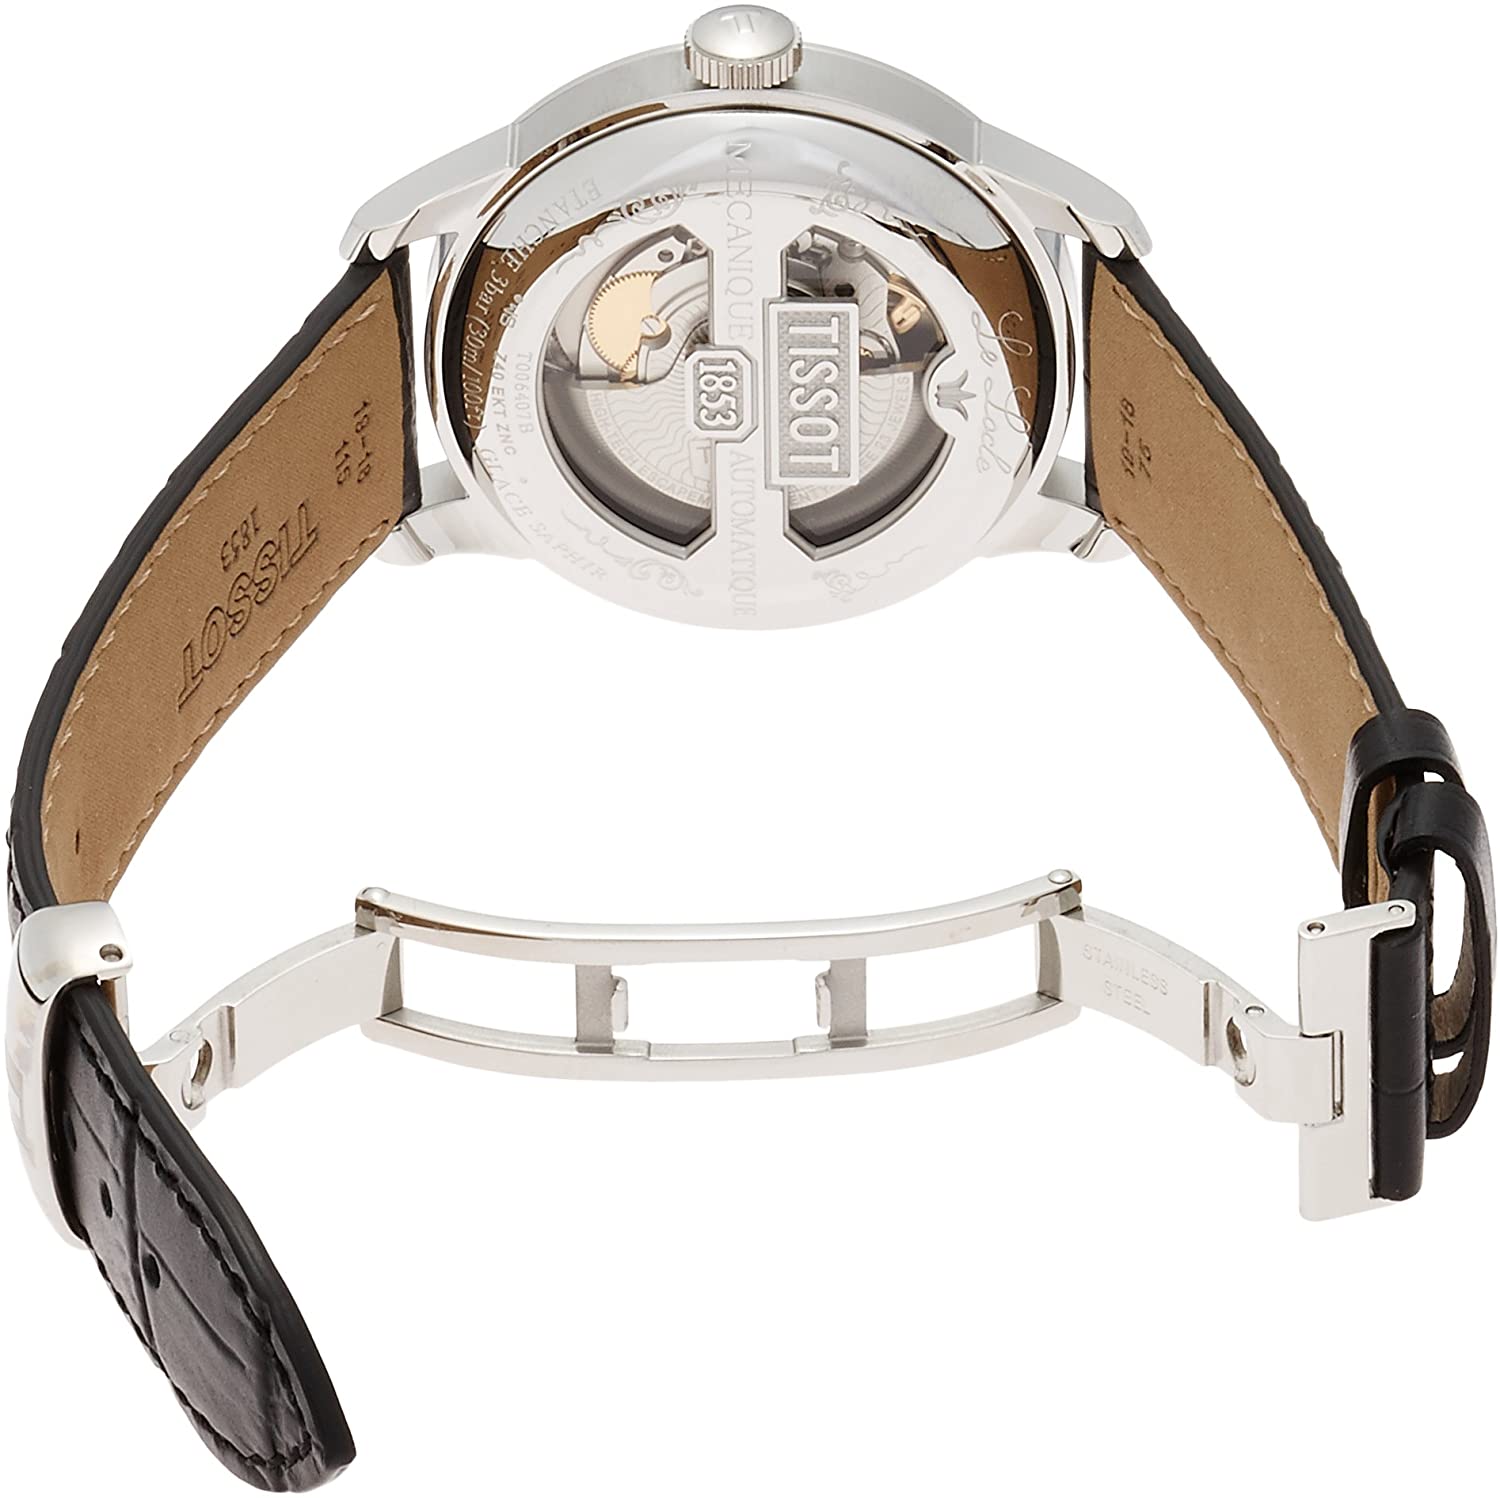 Tissot Men's Locle Swiss Automatic Watch T0064071603300